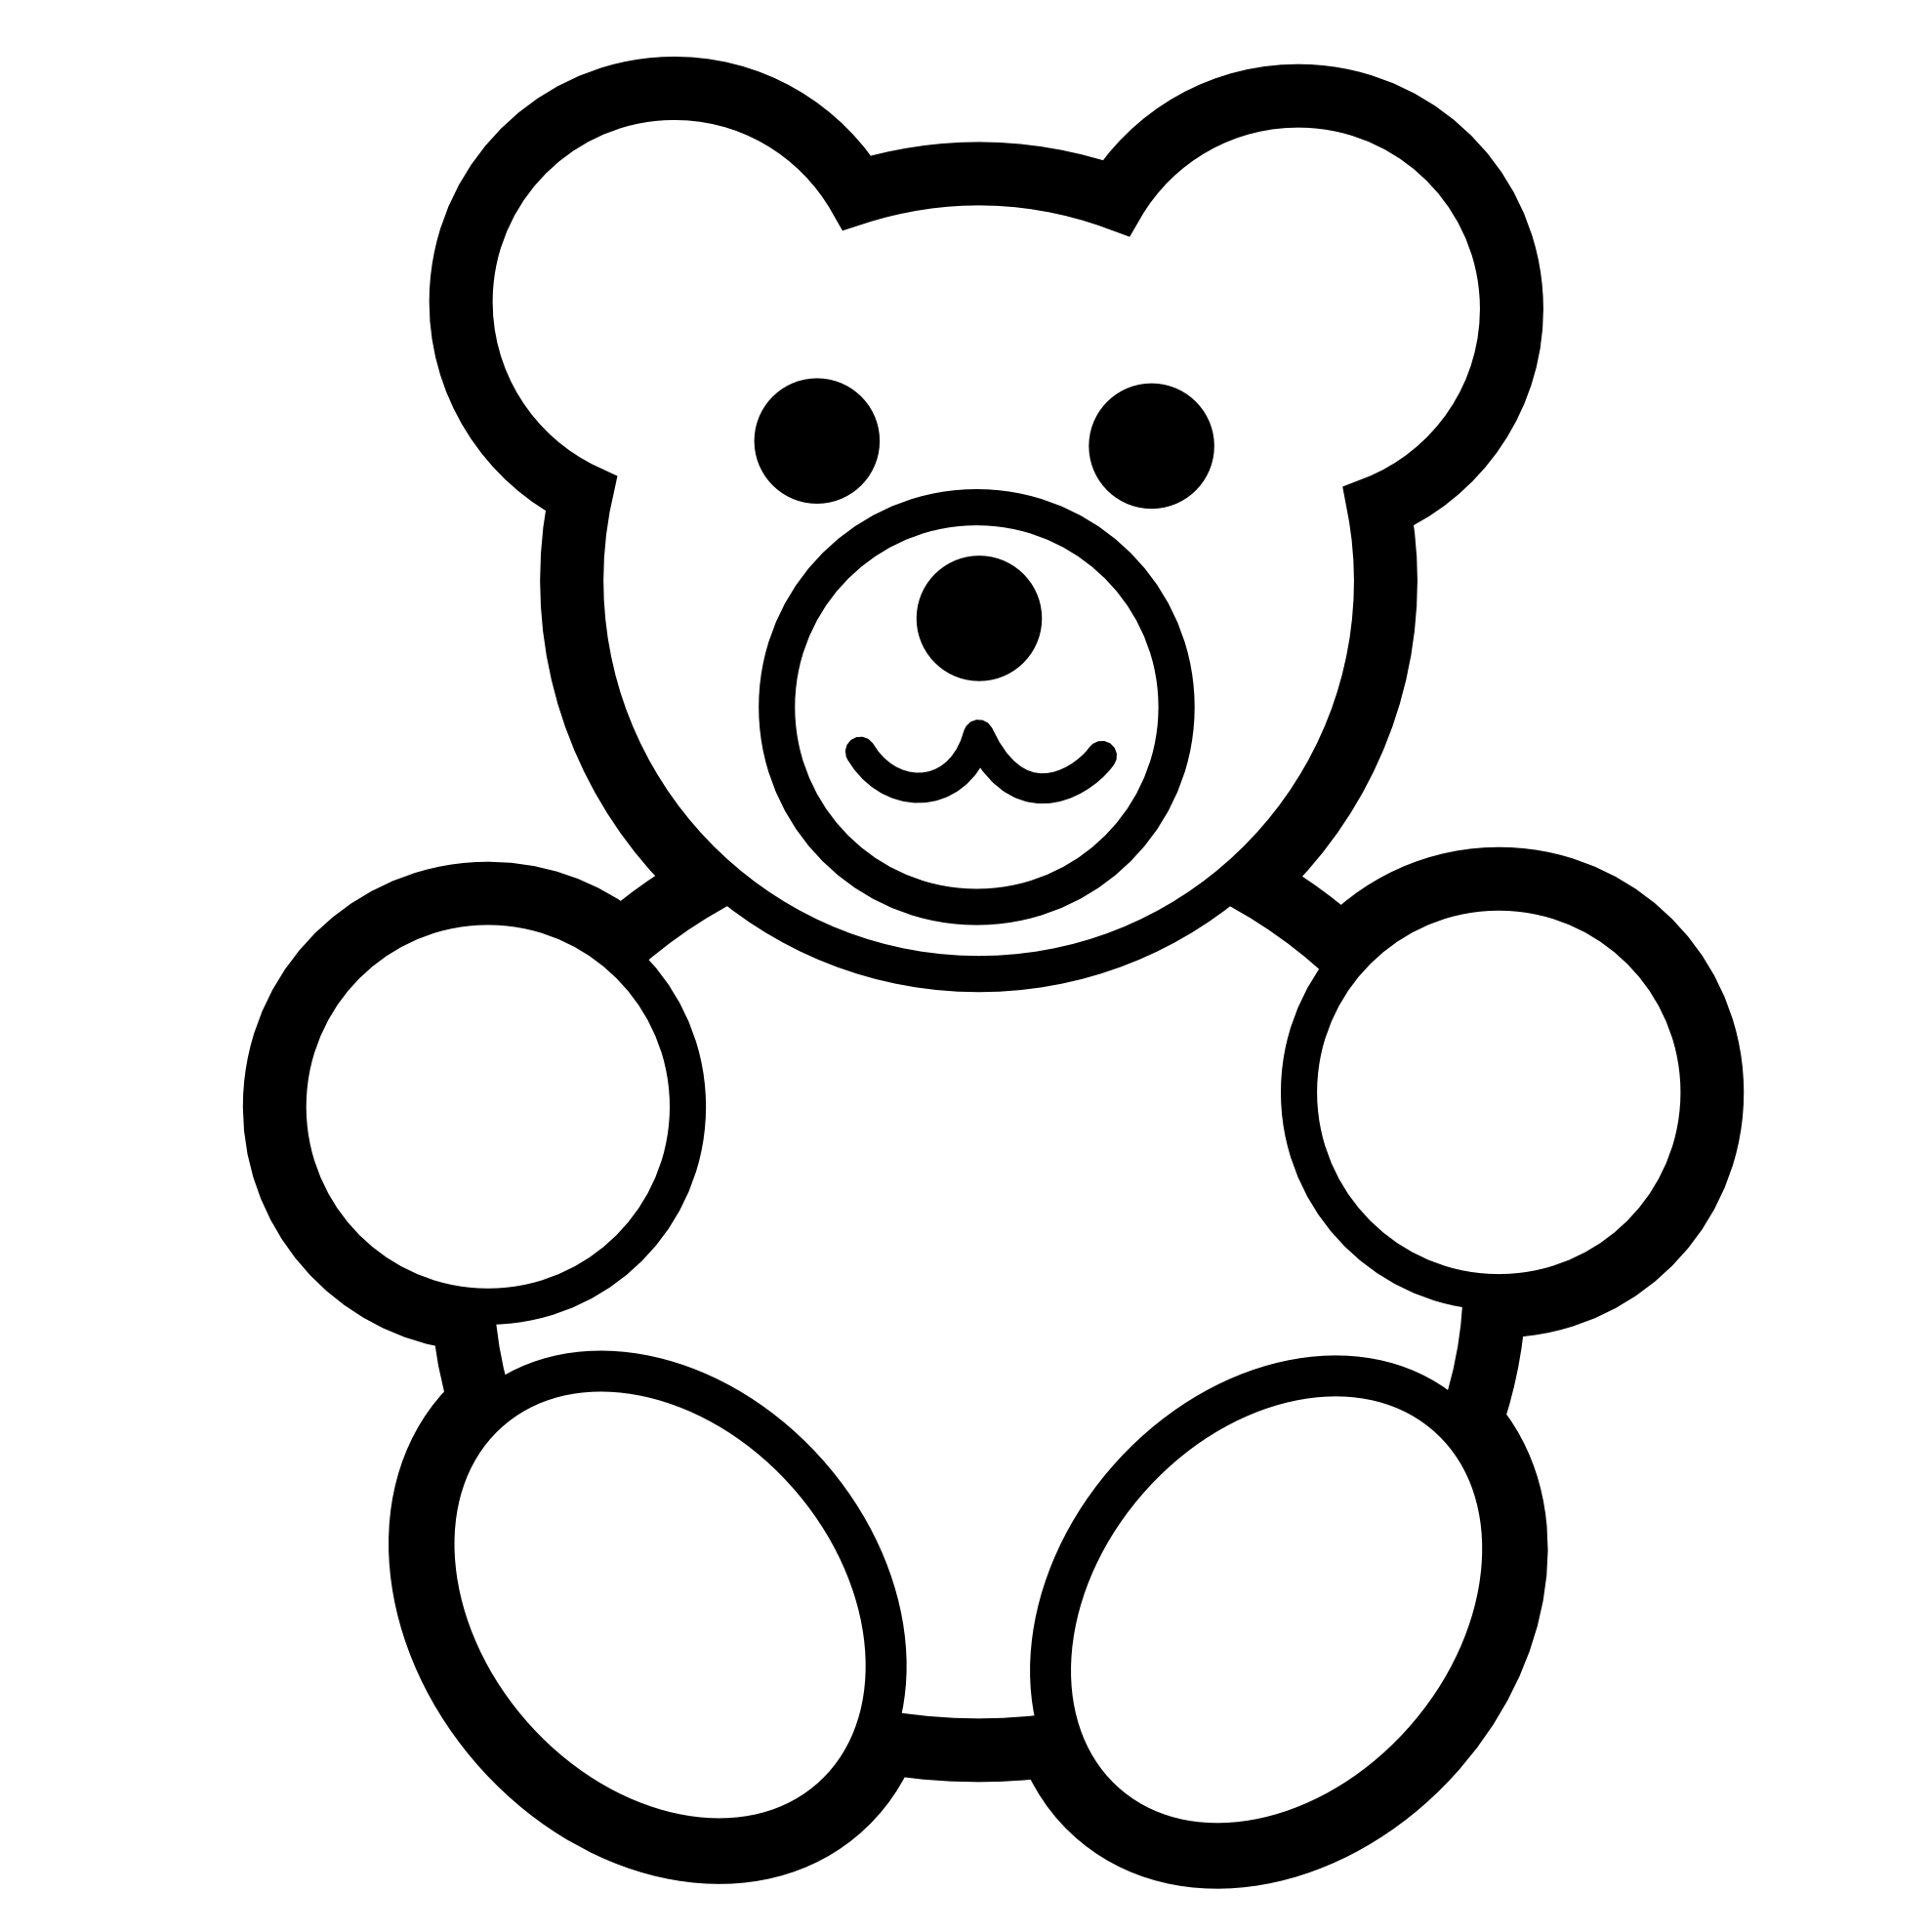 Open source clipart teddy bears